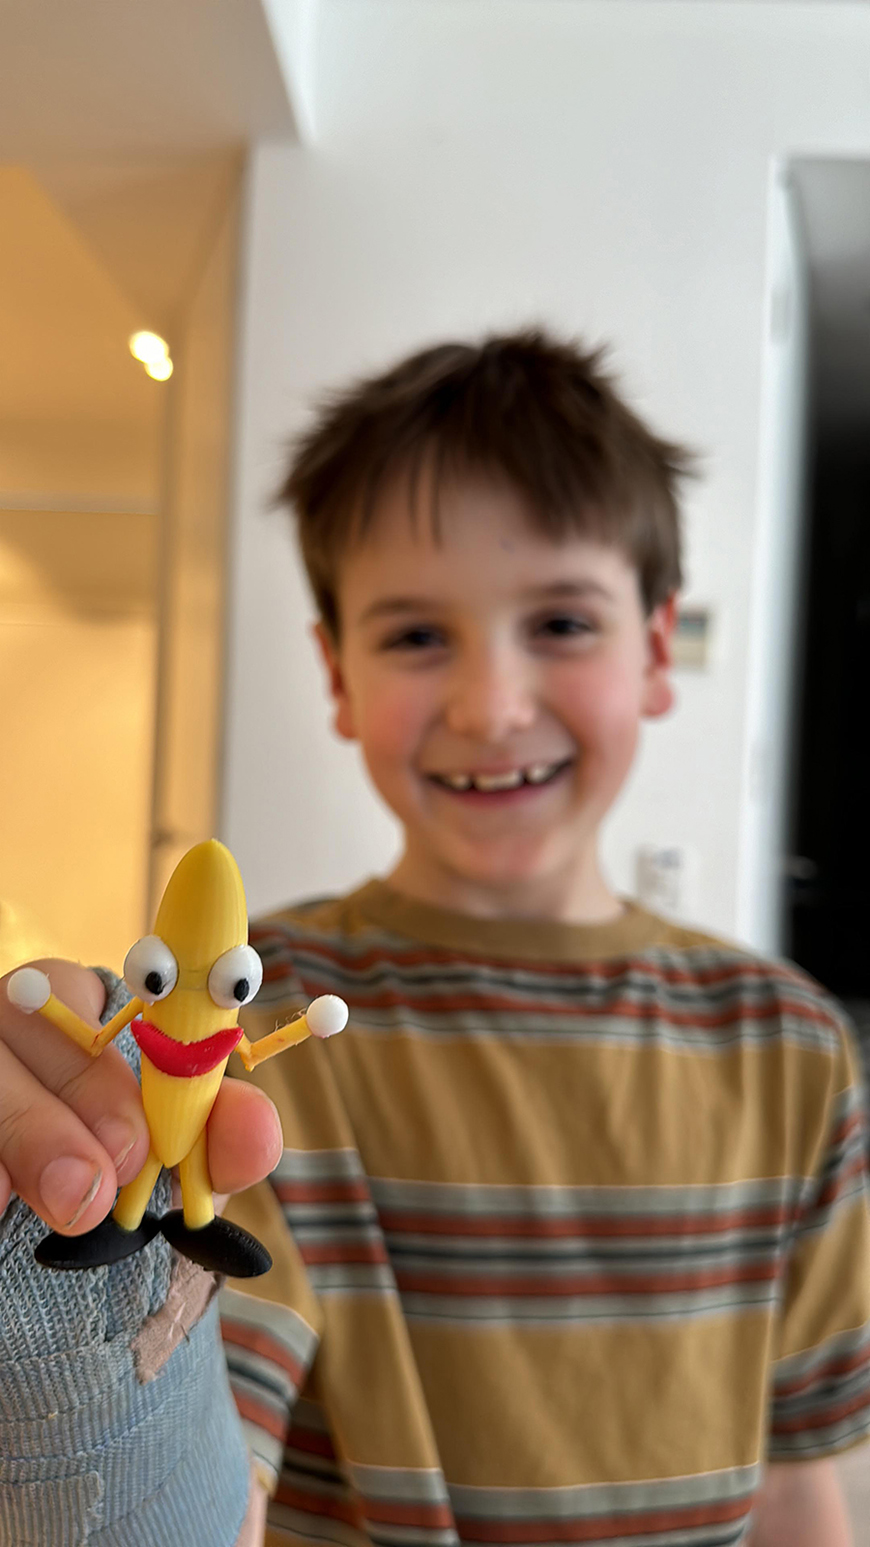 A boy holding a toy banana.